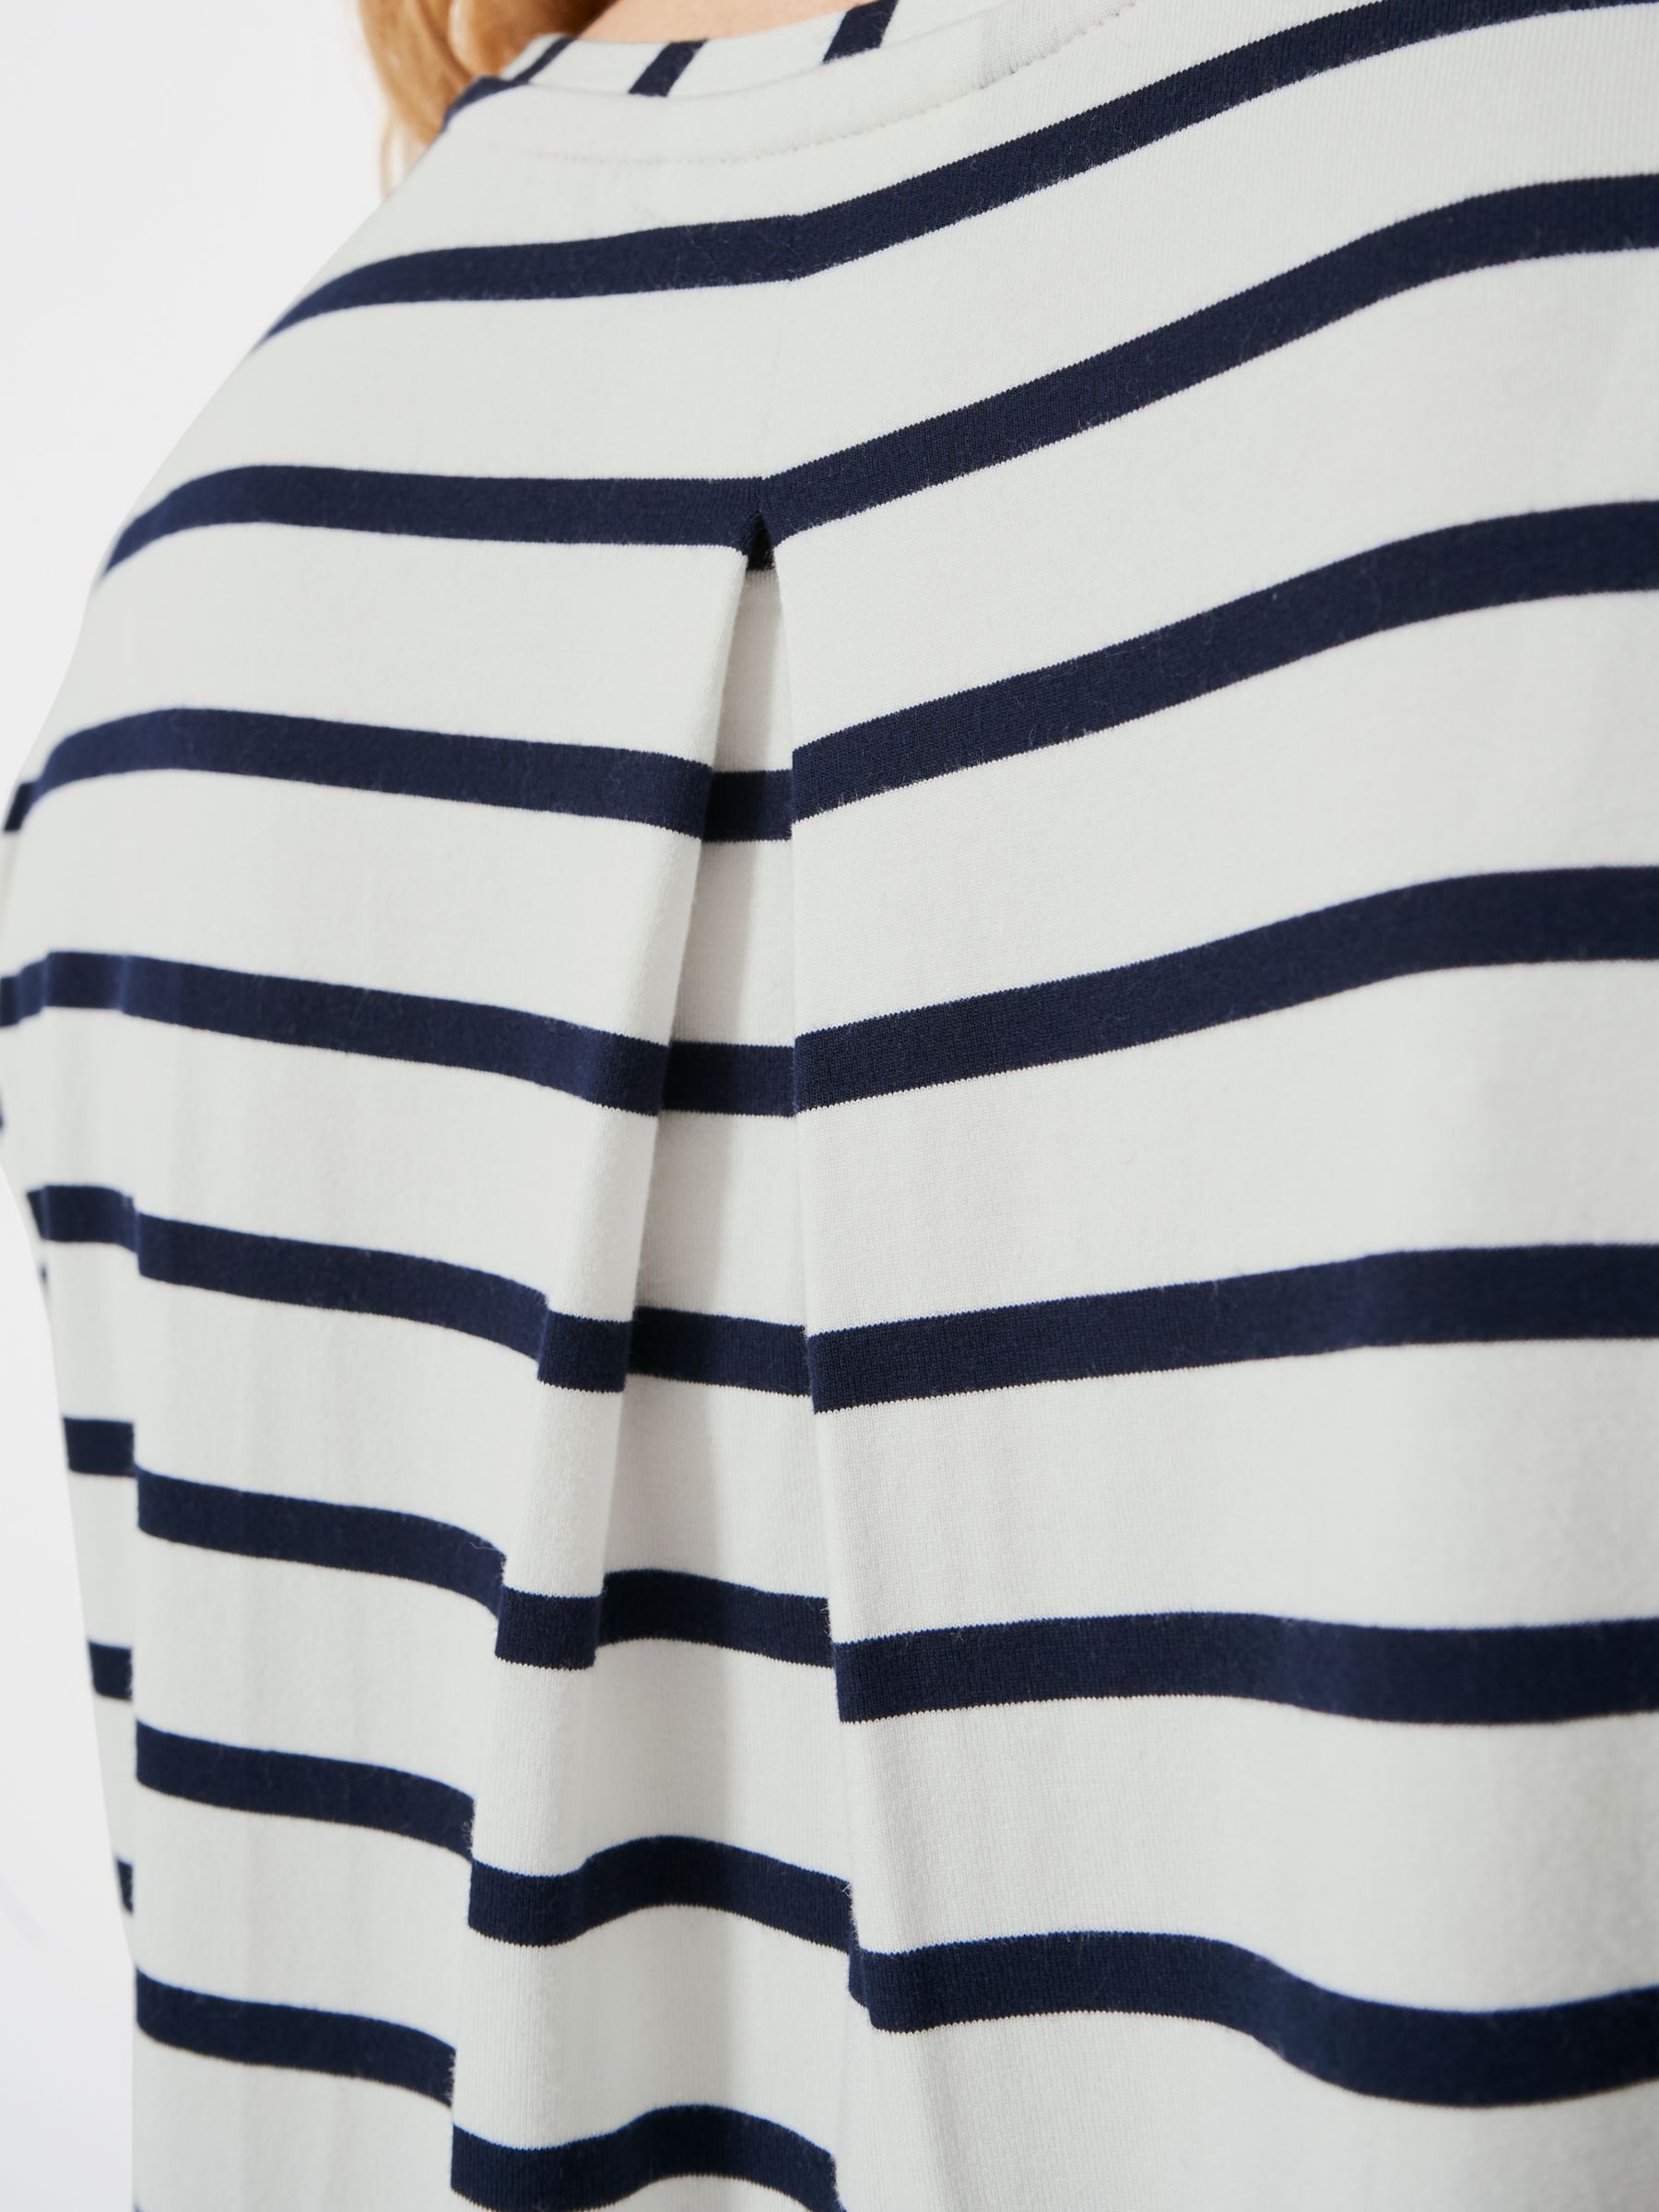 Crew Clothing Ruby Stripe T-Shirt, White/Navy, 6